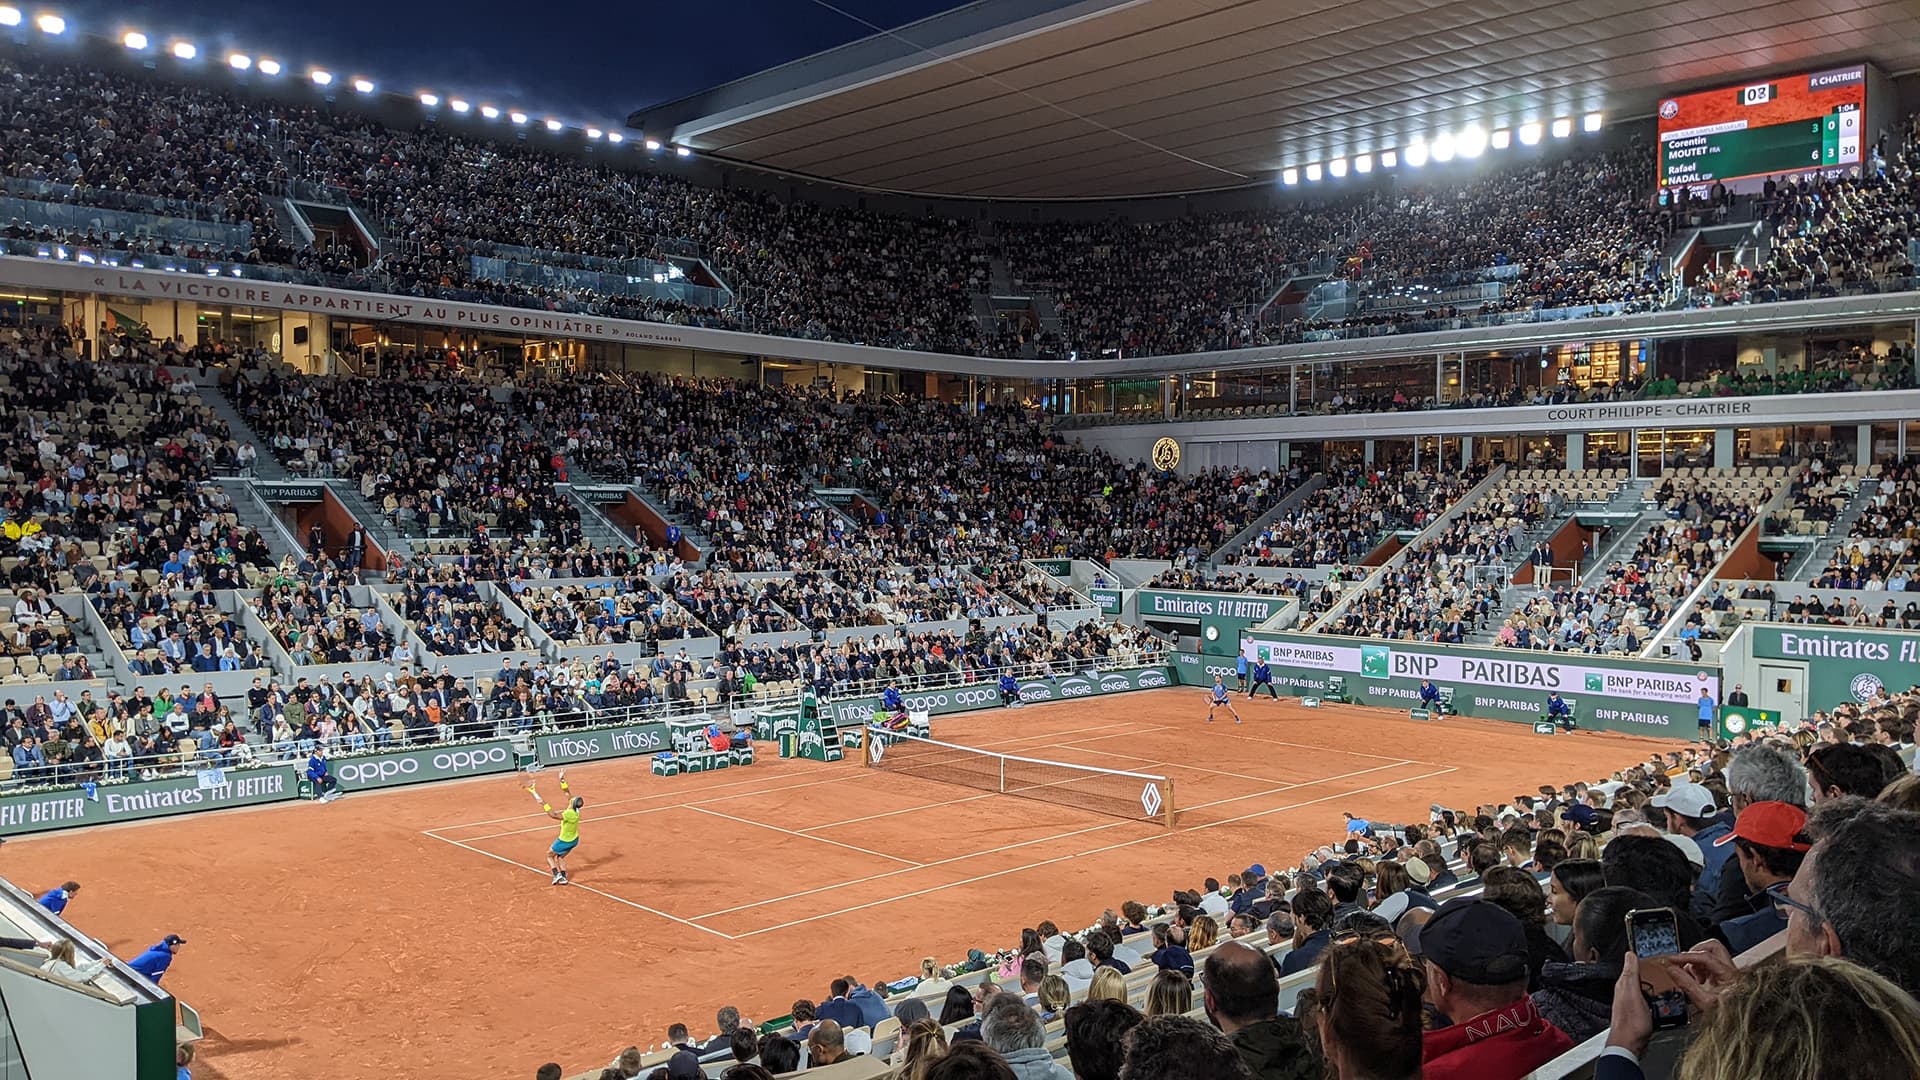 Court Philippe Chatrier at Roland Garros